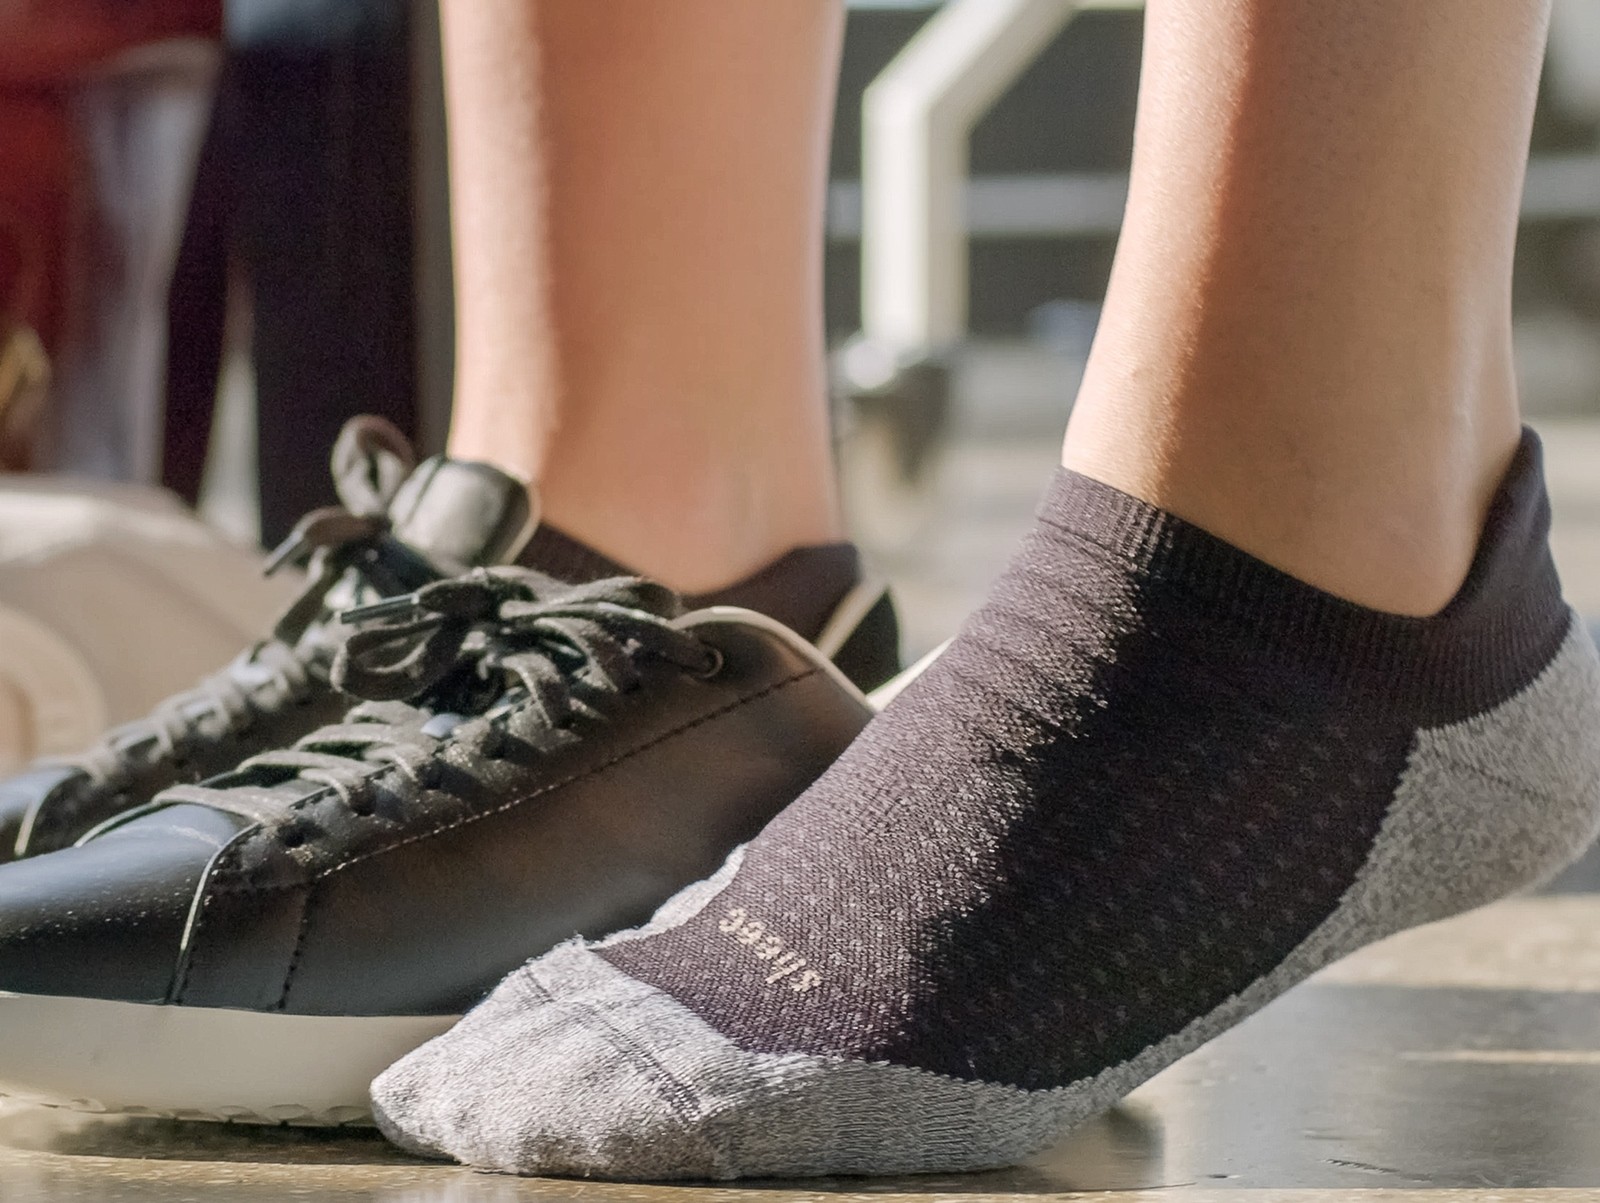 Sheec ComFits: Everyday High Performance Compression Socks